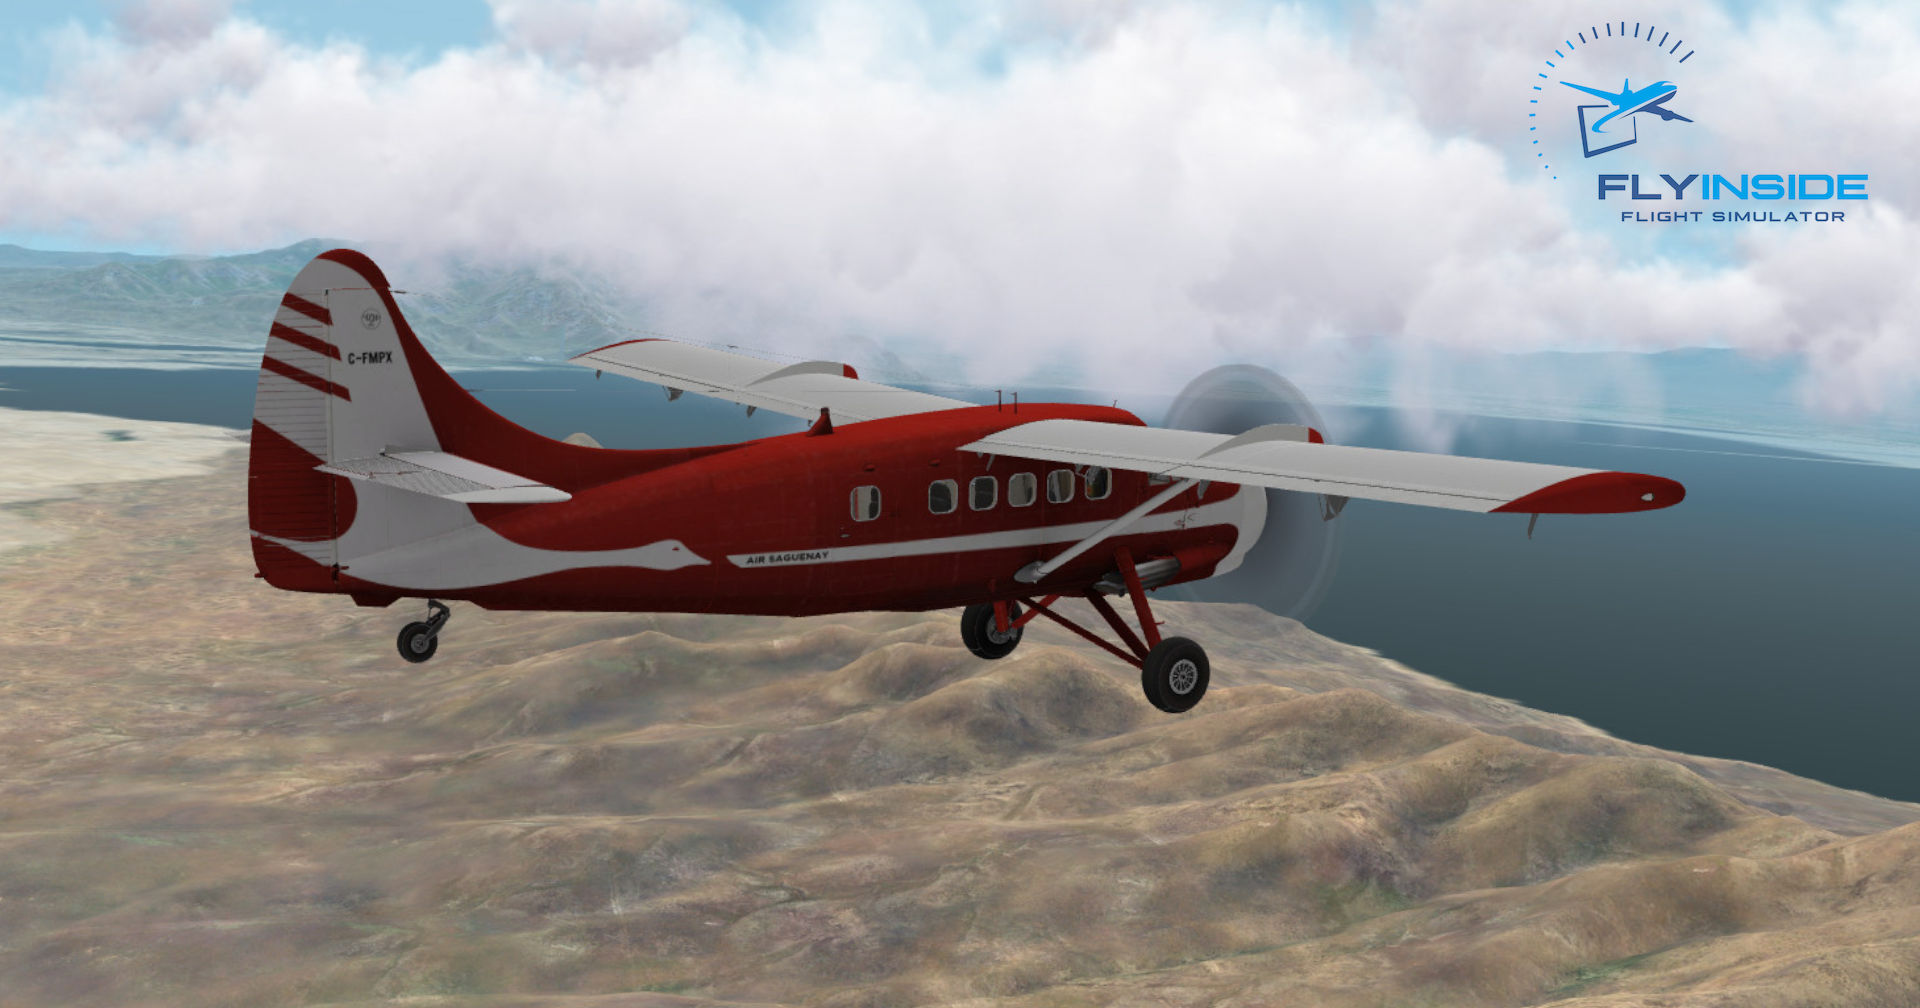 FlyInside Flight Simulator Release